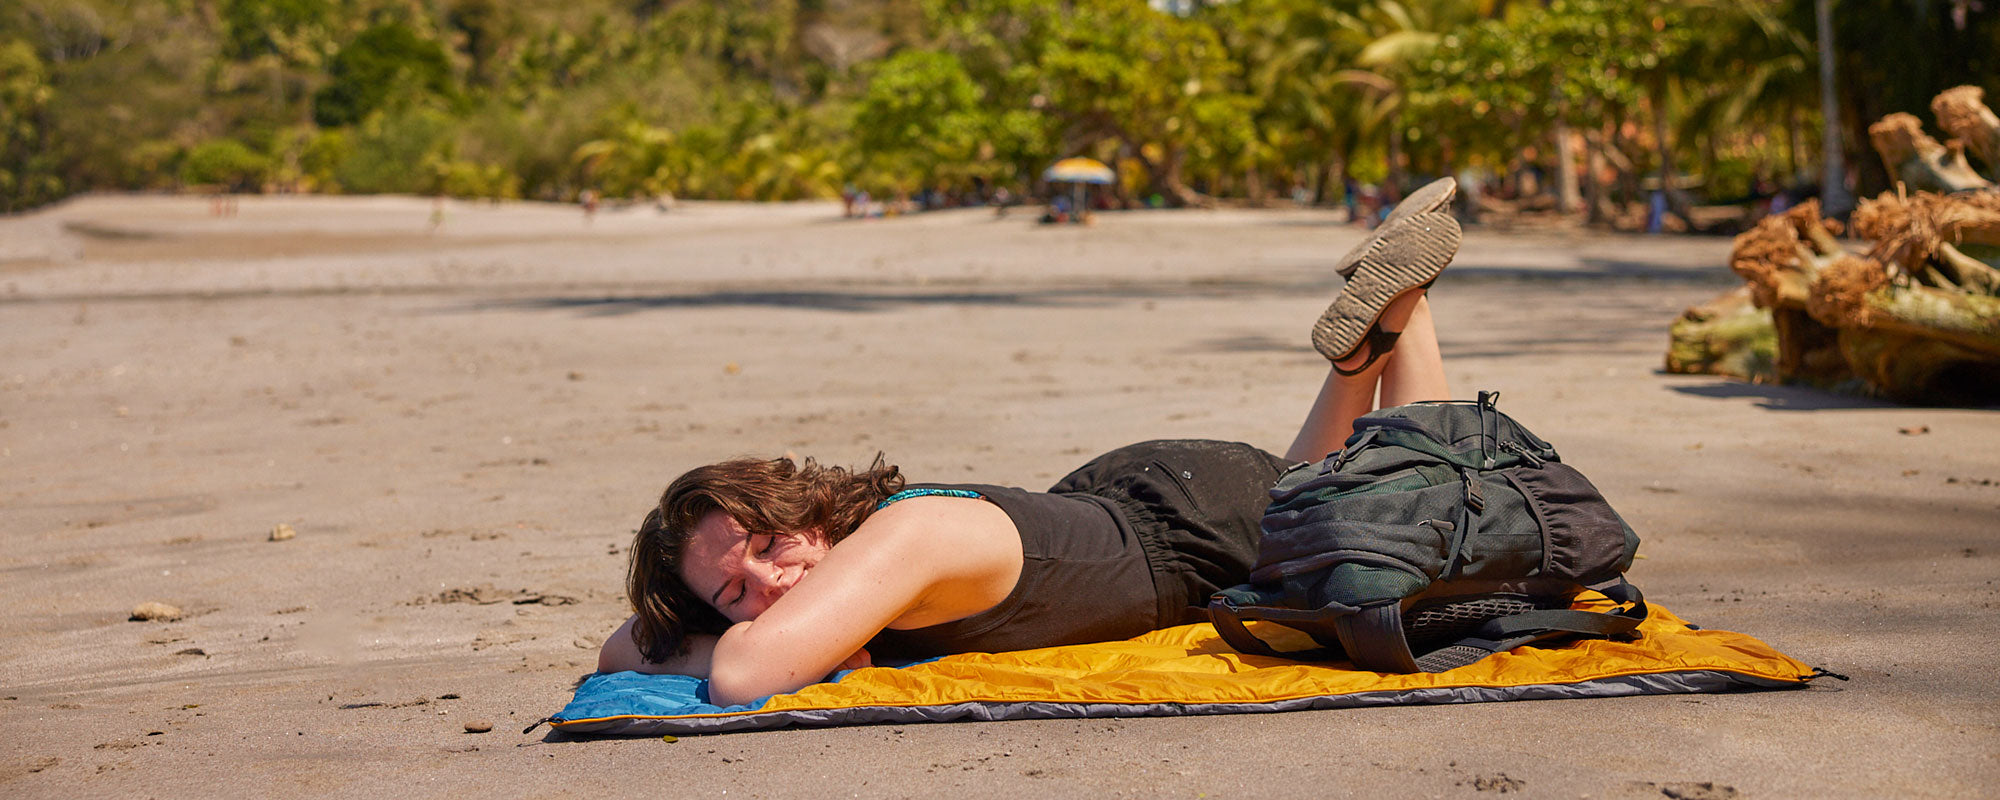 A woman sleeping on her Teton blanket on the beach